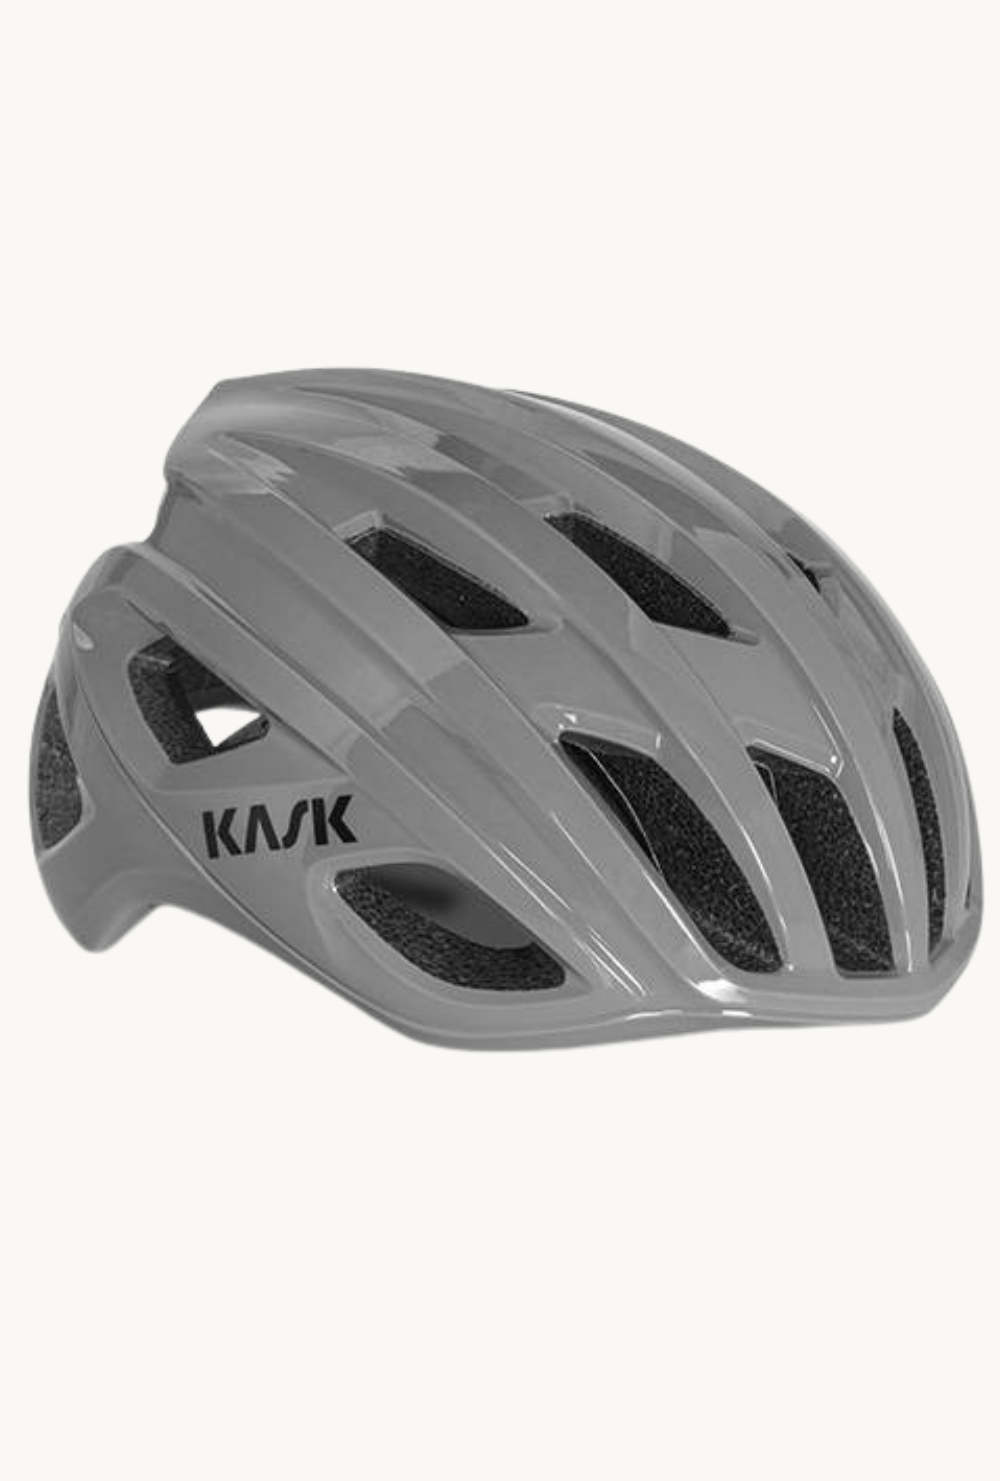 Helmet - Kask Mojito Greymedium / Grey